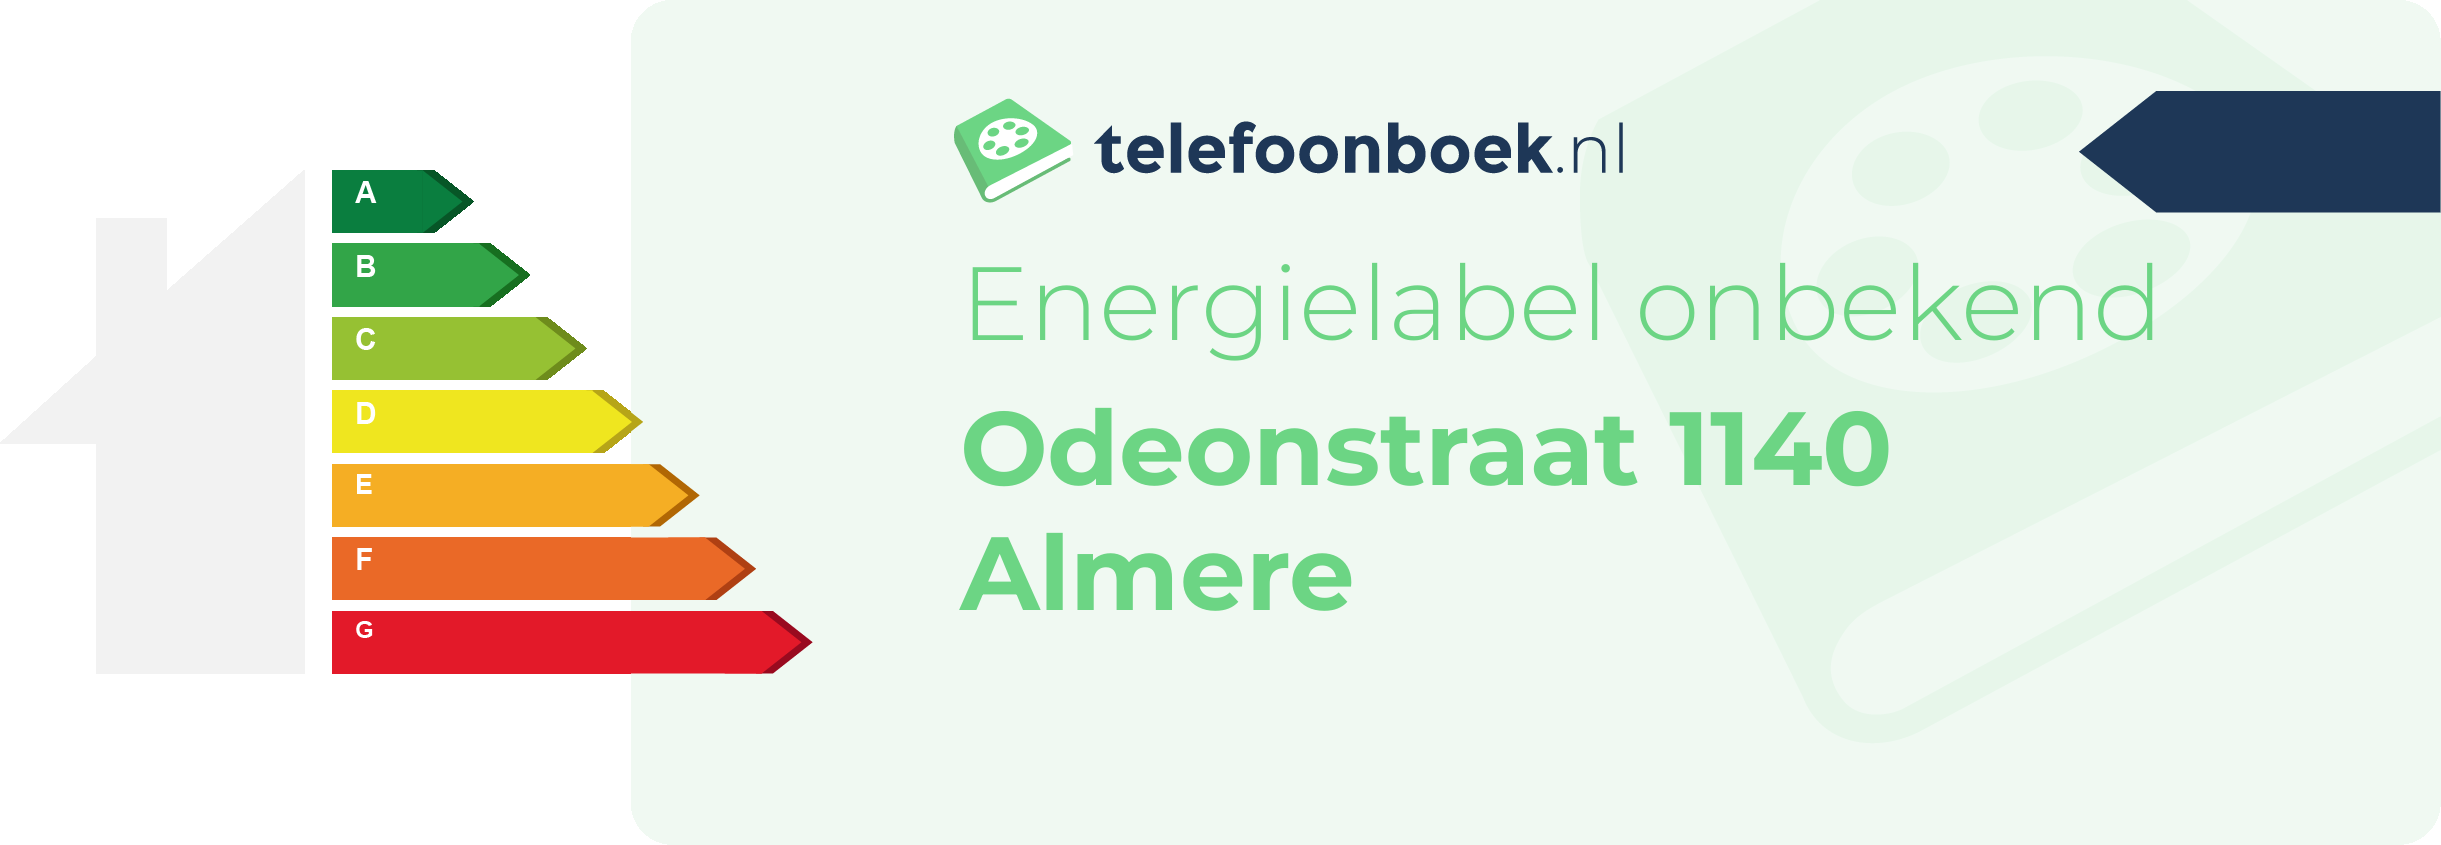 Energielabel Odeonstraat 1140 Almere